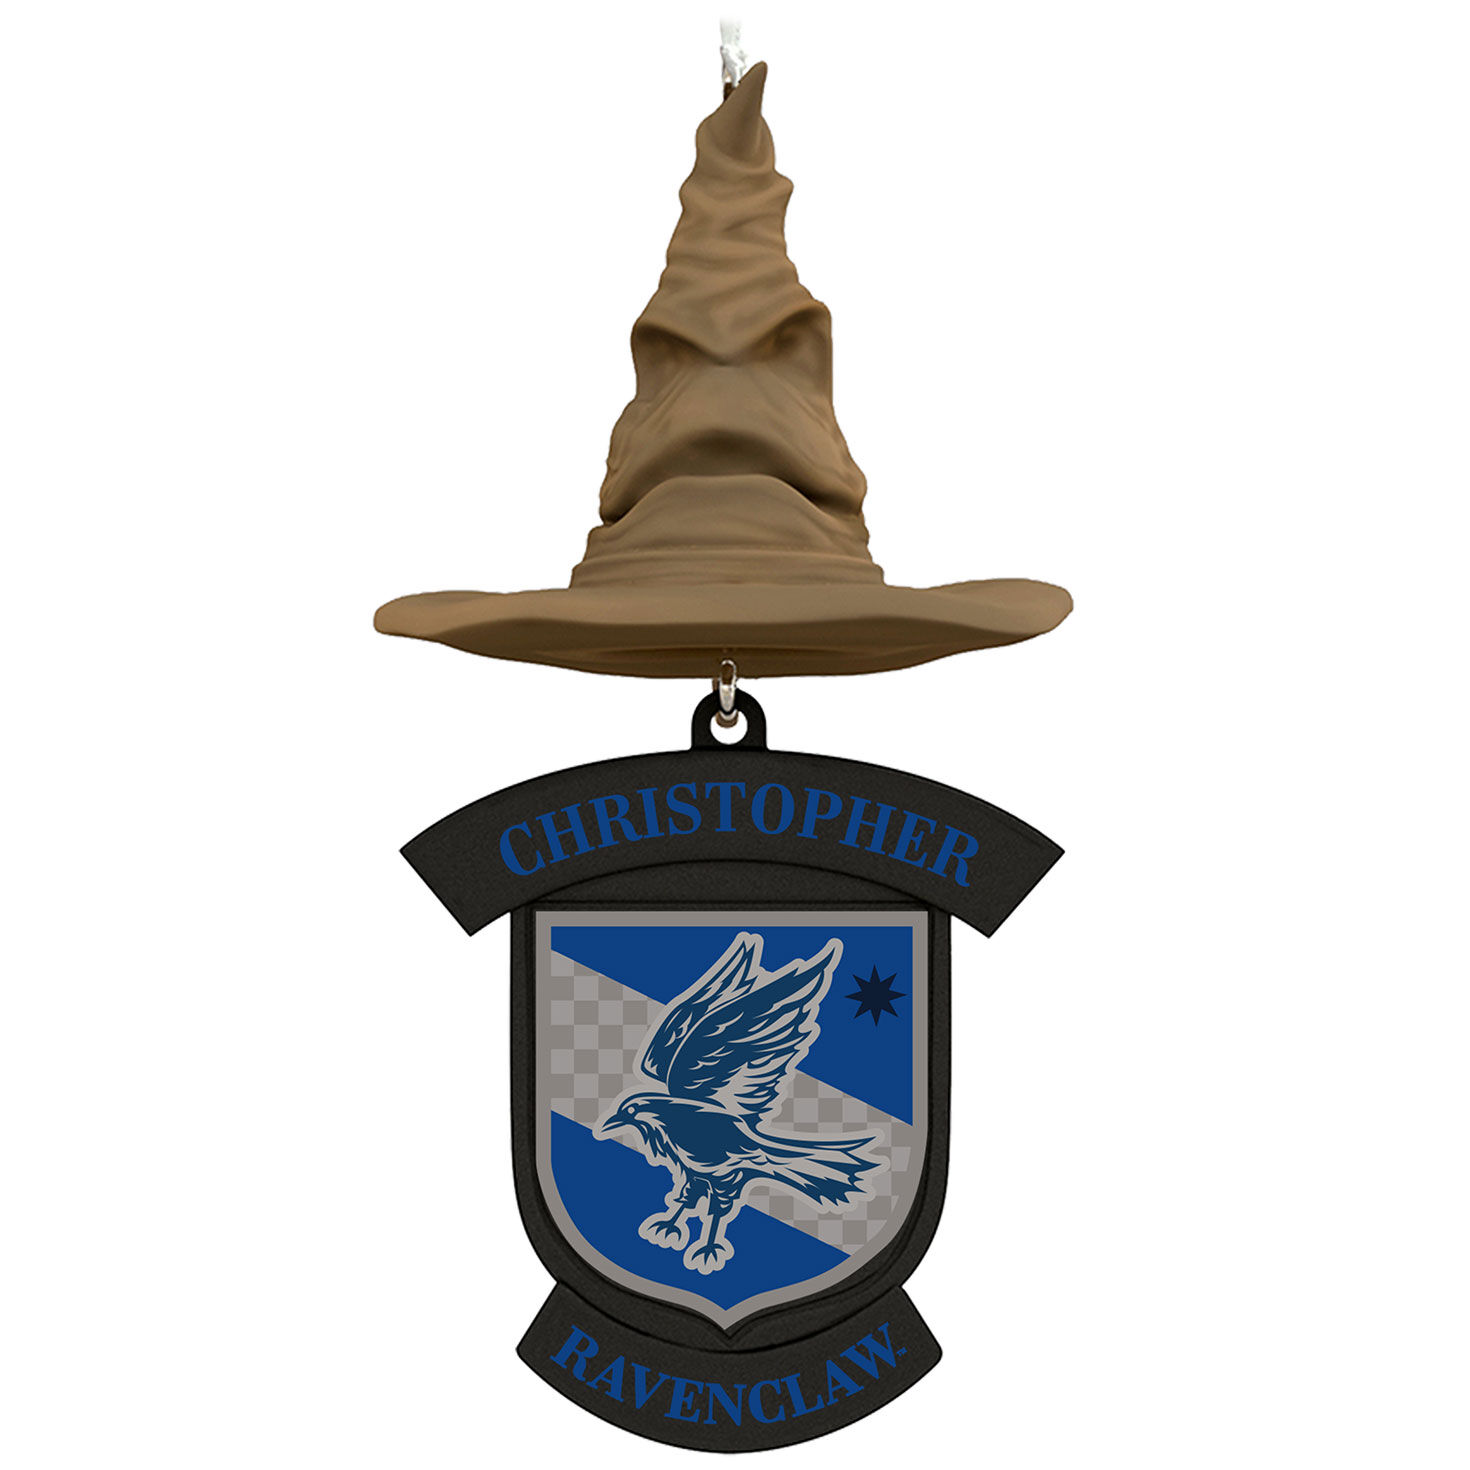 Universal Ornament - Harry Potter - Ravenclaw Shield